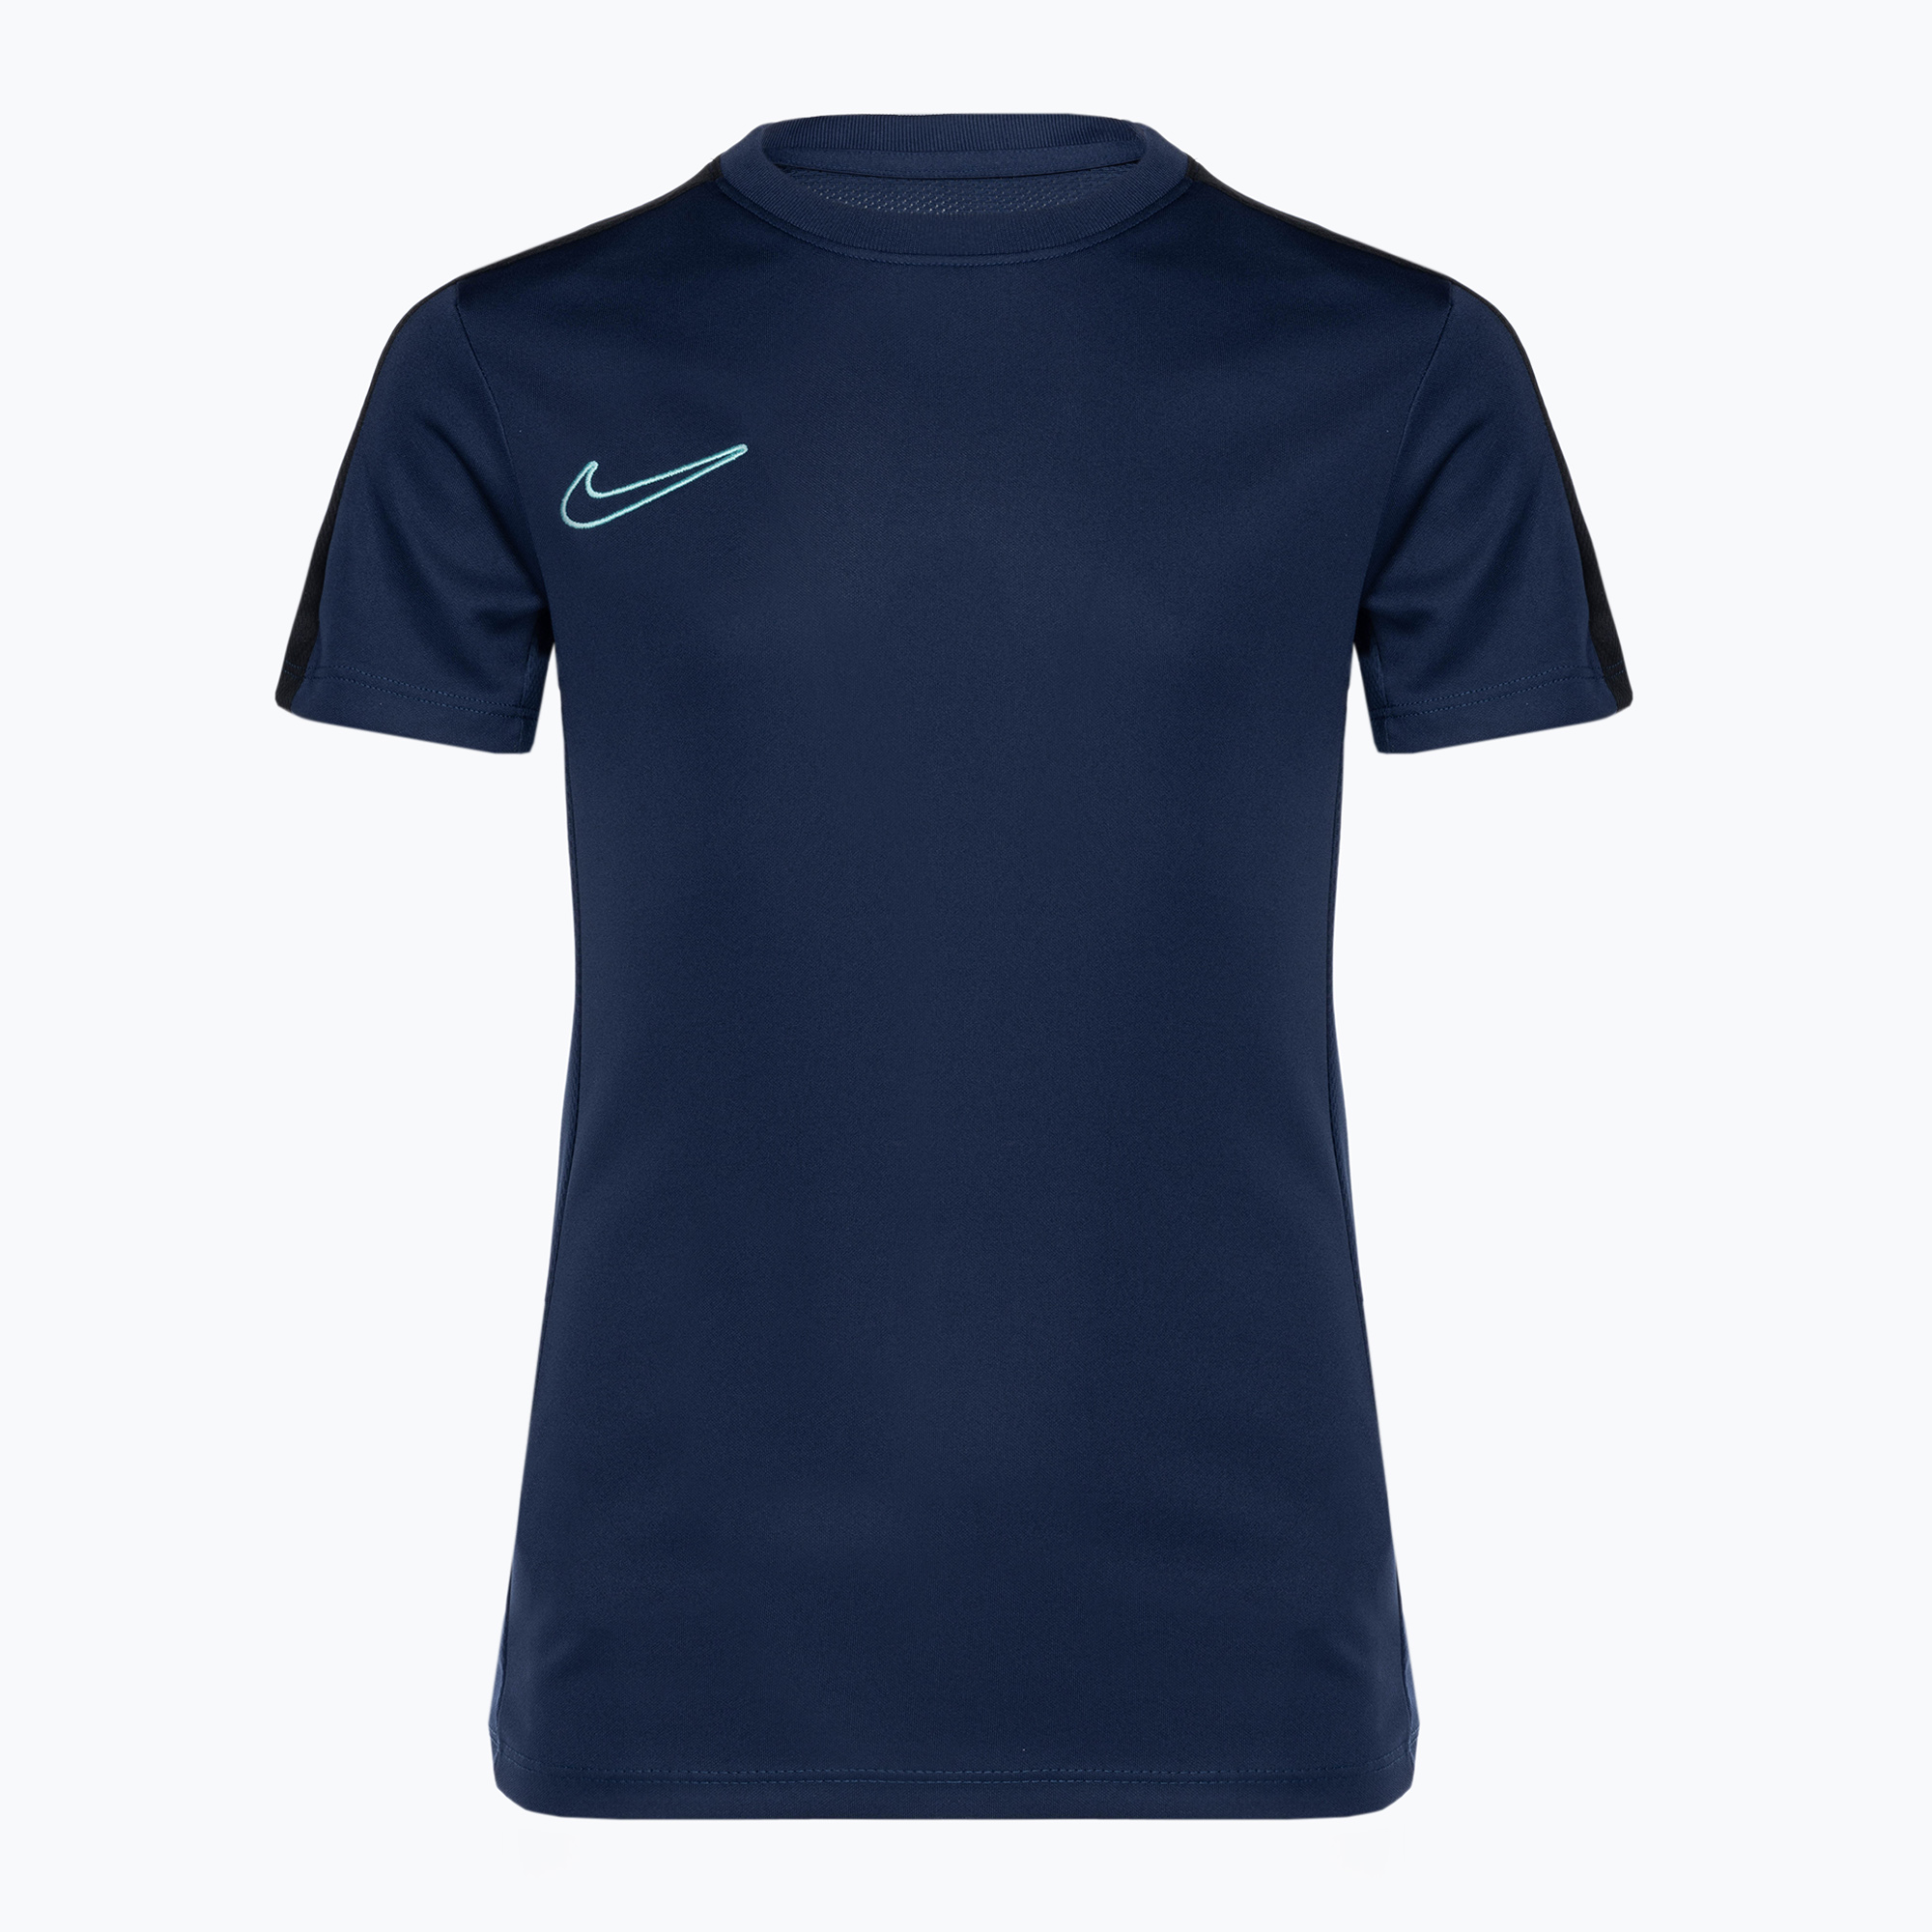 Detské futbalové tričko Nike Dri-Fit Academy23 midnight navy/black/hyper turquoise